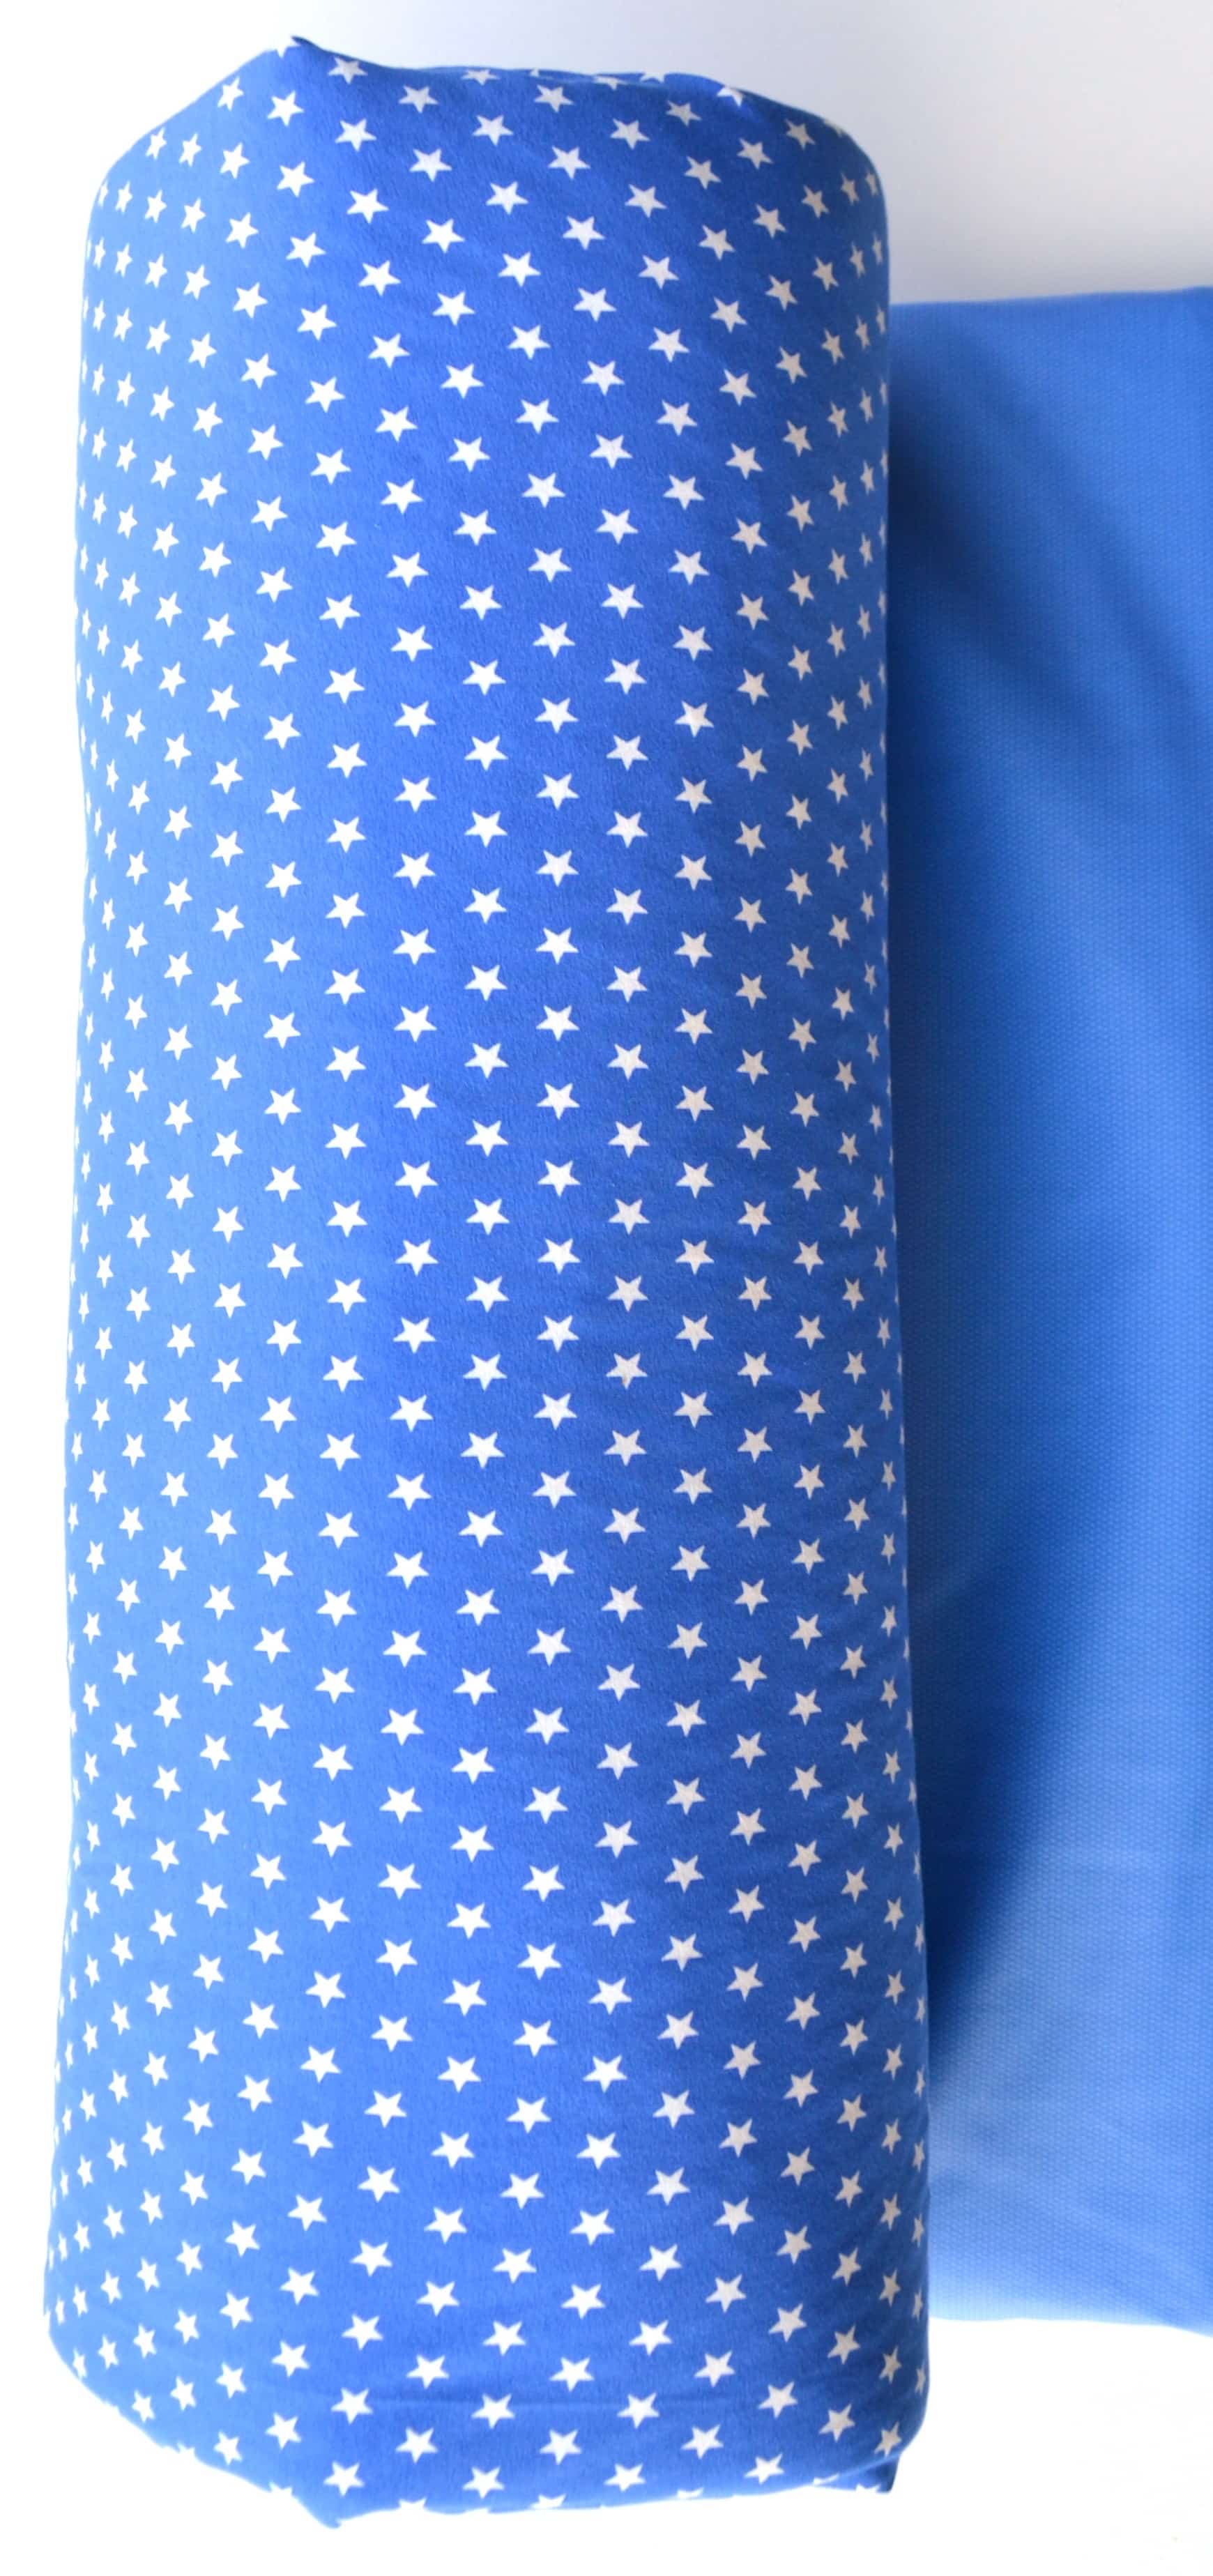 Aankleedkussen XL Blue plaid / kobalt witte ster